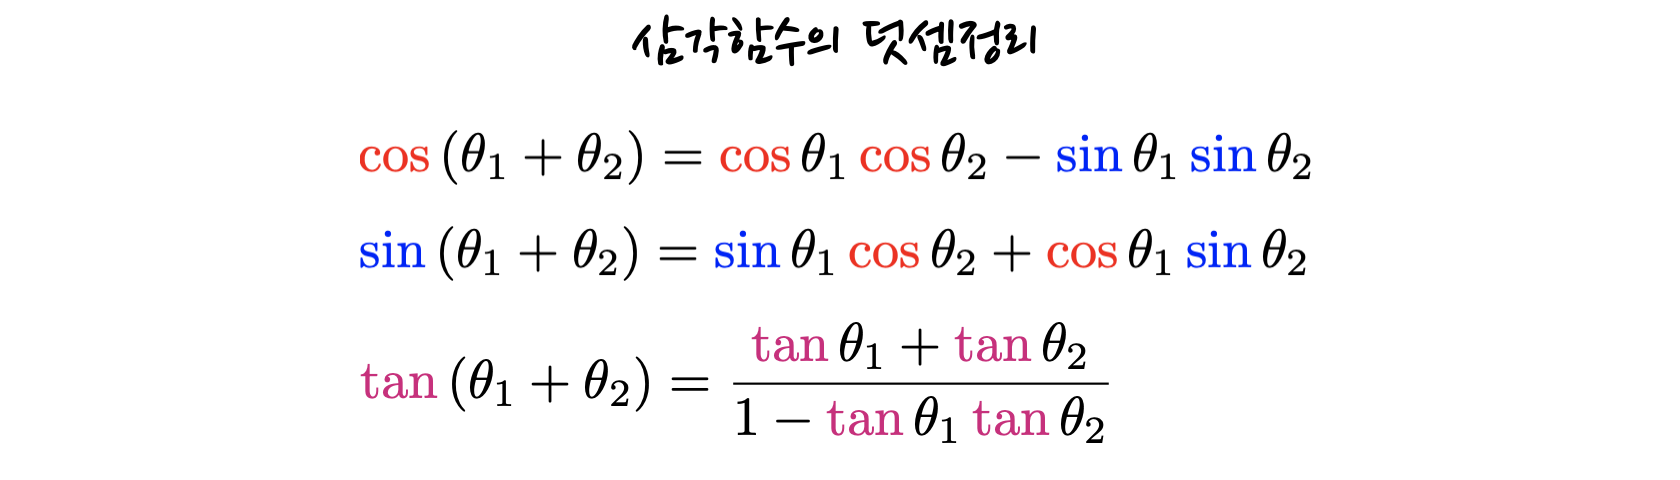 equations for angular sum of the trigonometric functions